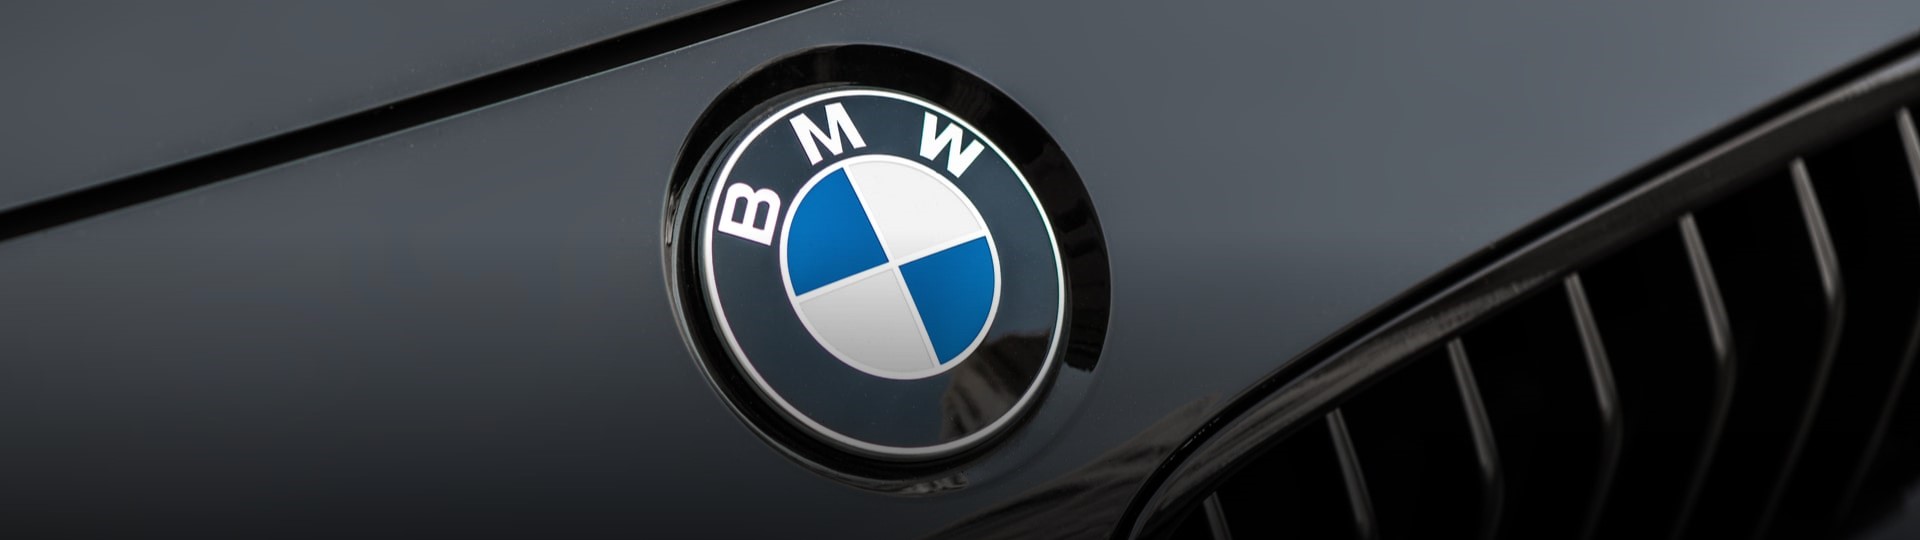 Automobilka BMW prodala v pololetí rekordních 1,34 milionu aut